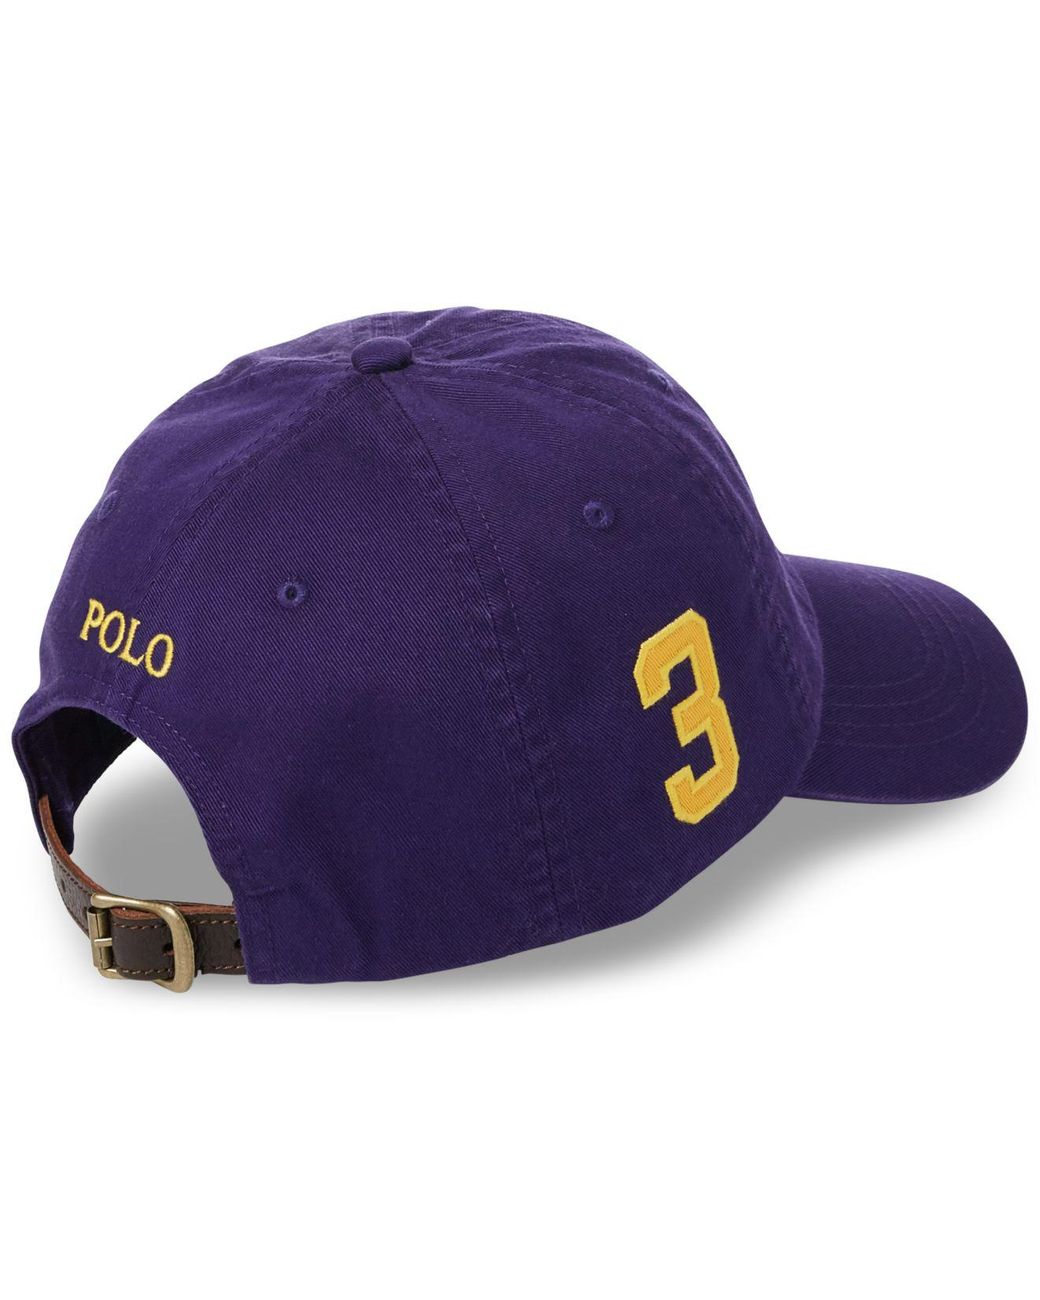 Polo Ralph Lauren Men's Hats Dillard's, 53% OFF